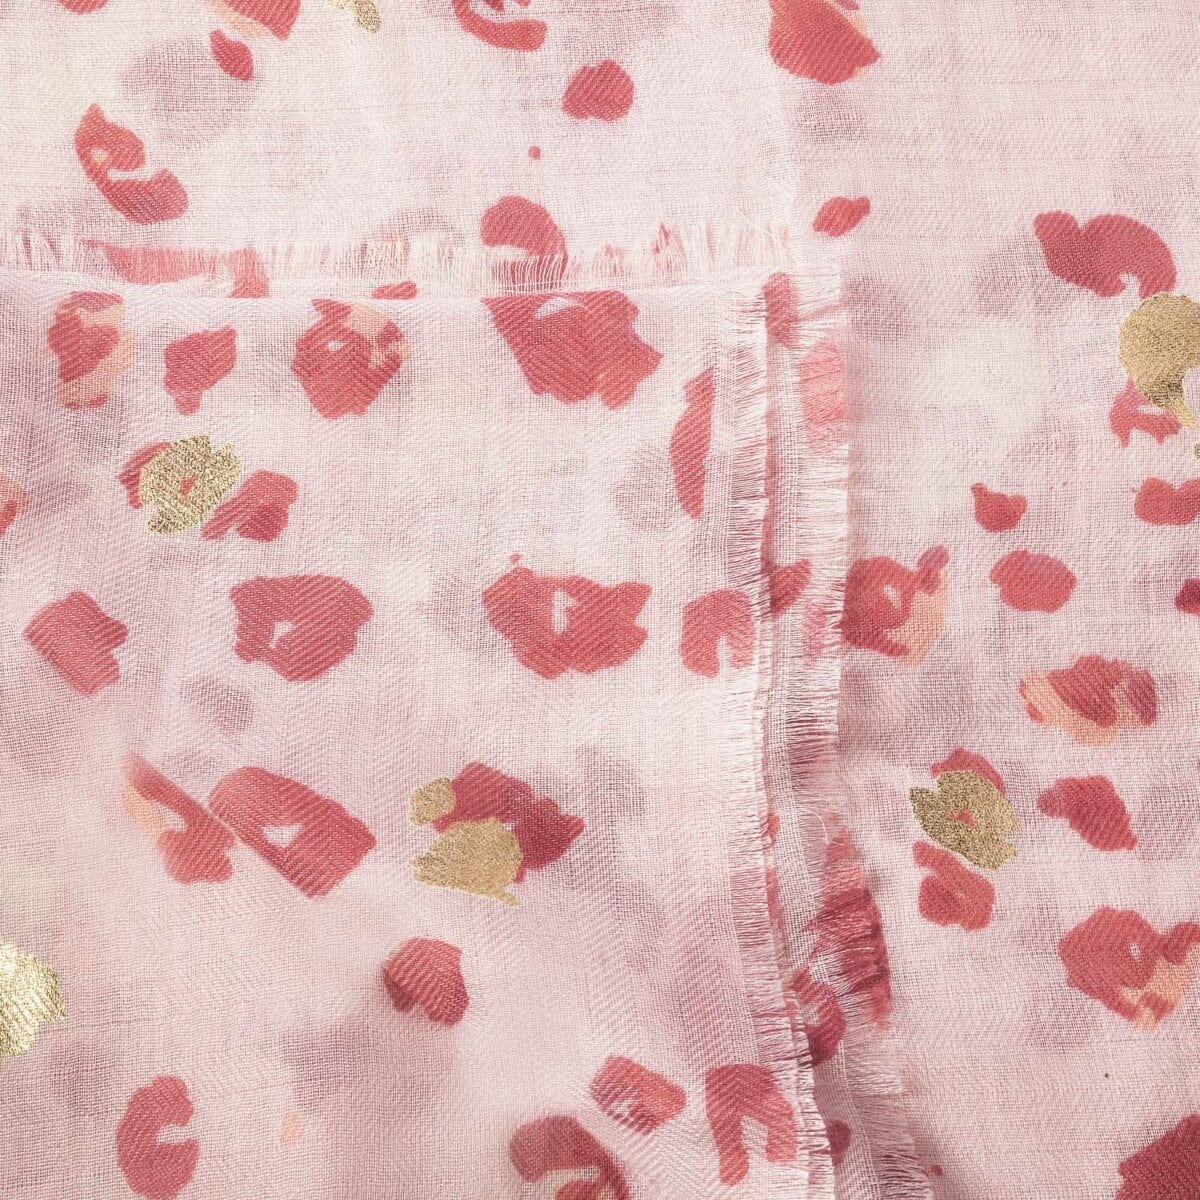 Katie Loxton Scarf Katie Loxton Scarf - Brush Stroke Leopard Print - Pink & Gold Foil